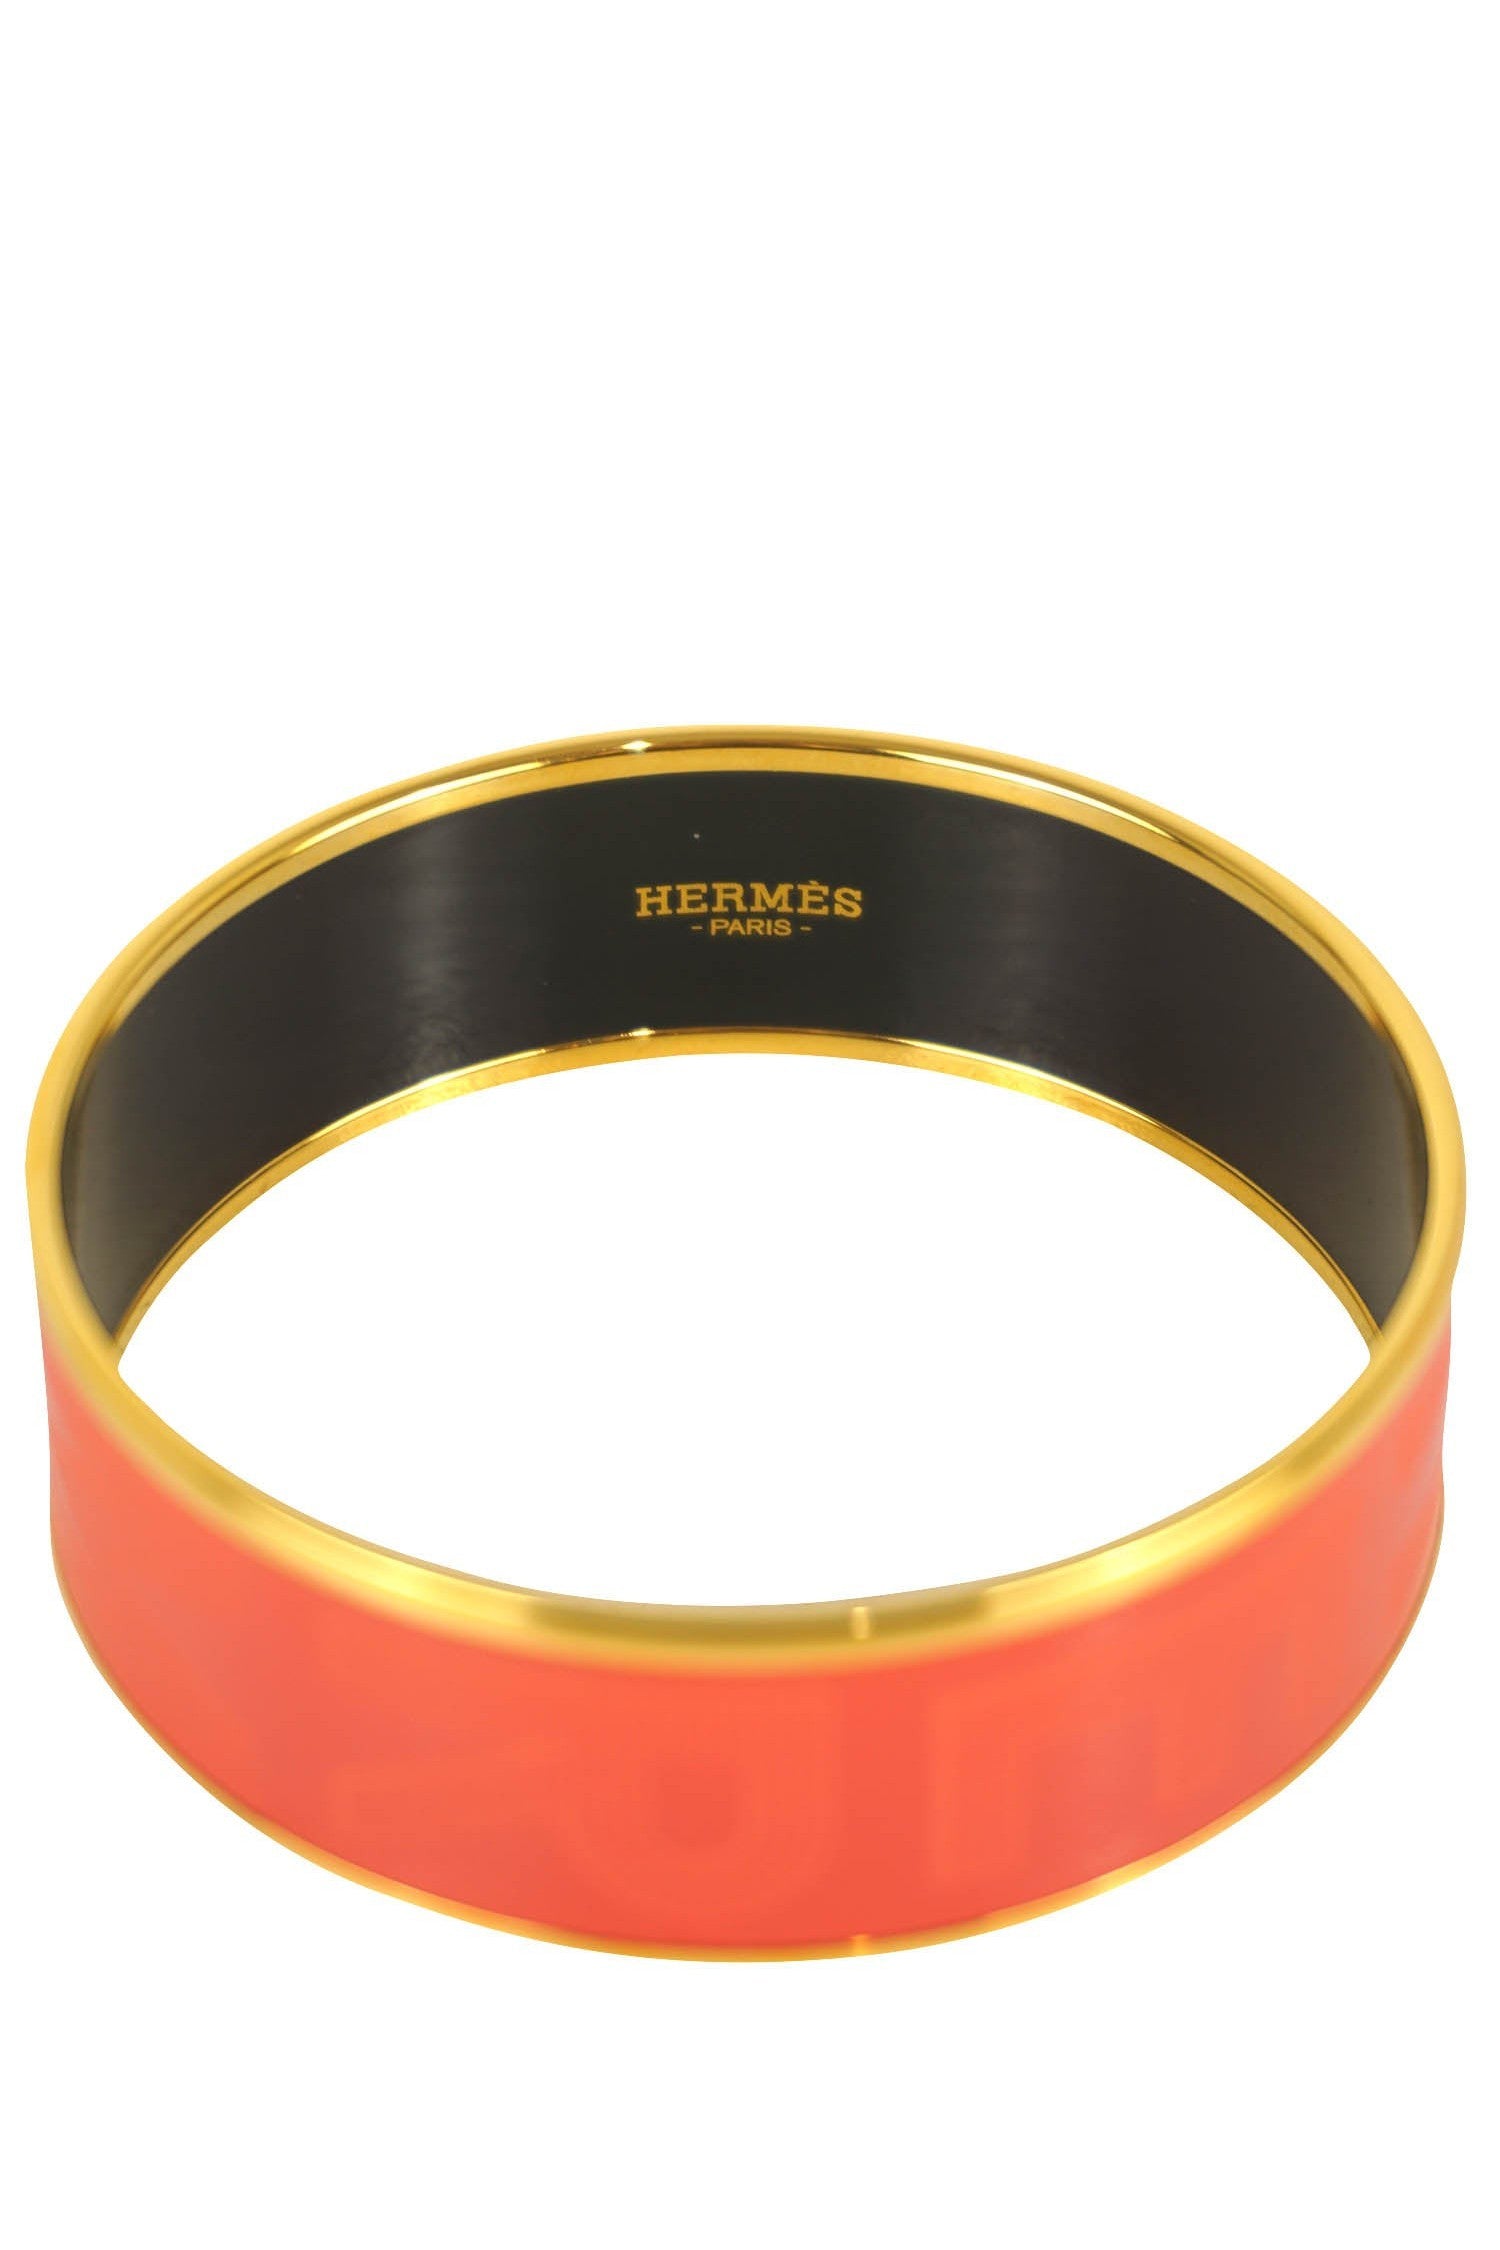 Hermès "HERMES" Enamel Bangle Bracelet